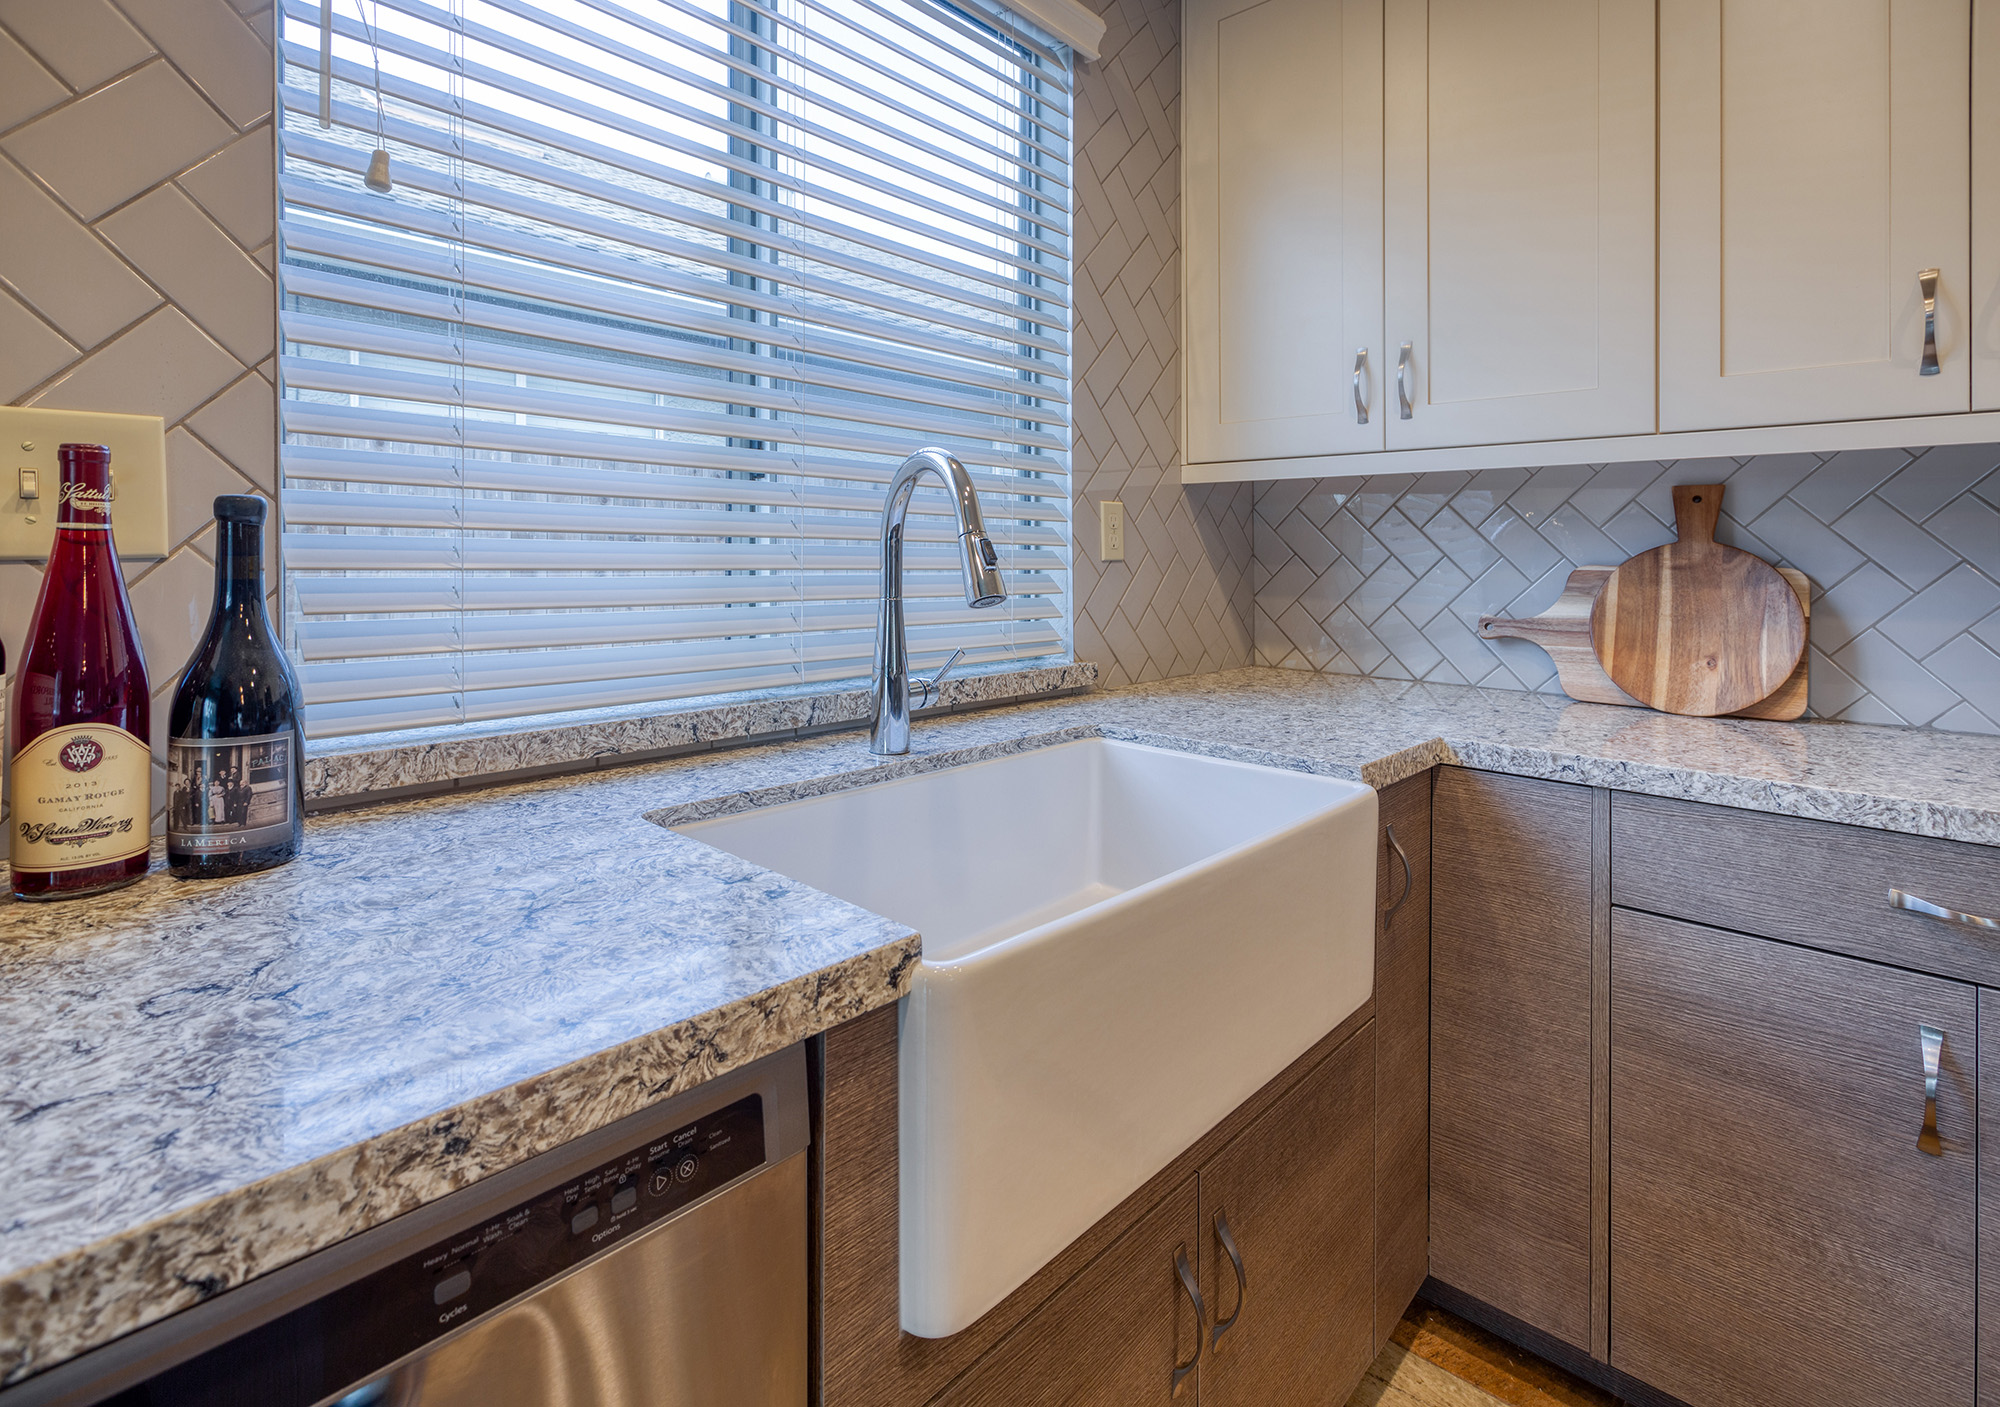 kitchen-remodel-apron-sink-tracy-california-ktj-design-co-interior-design.jpg